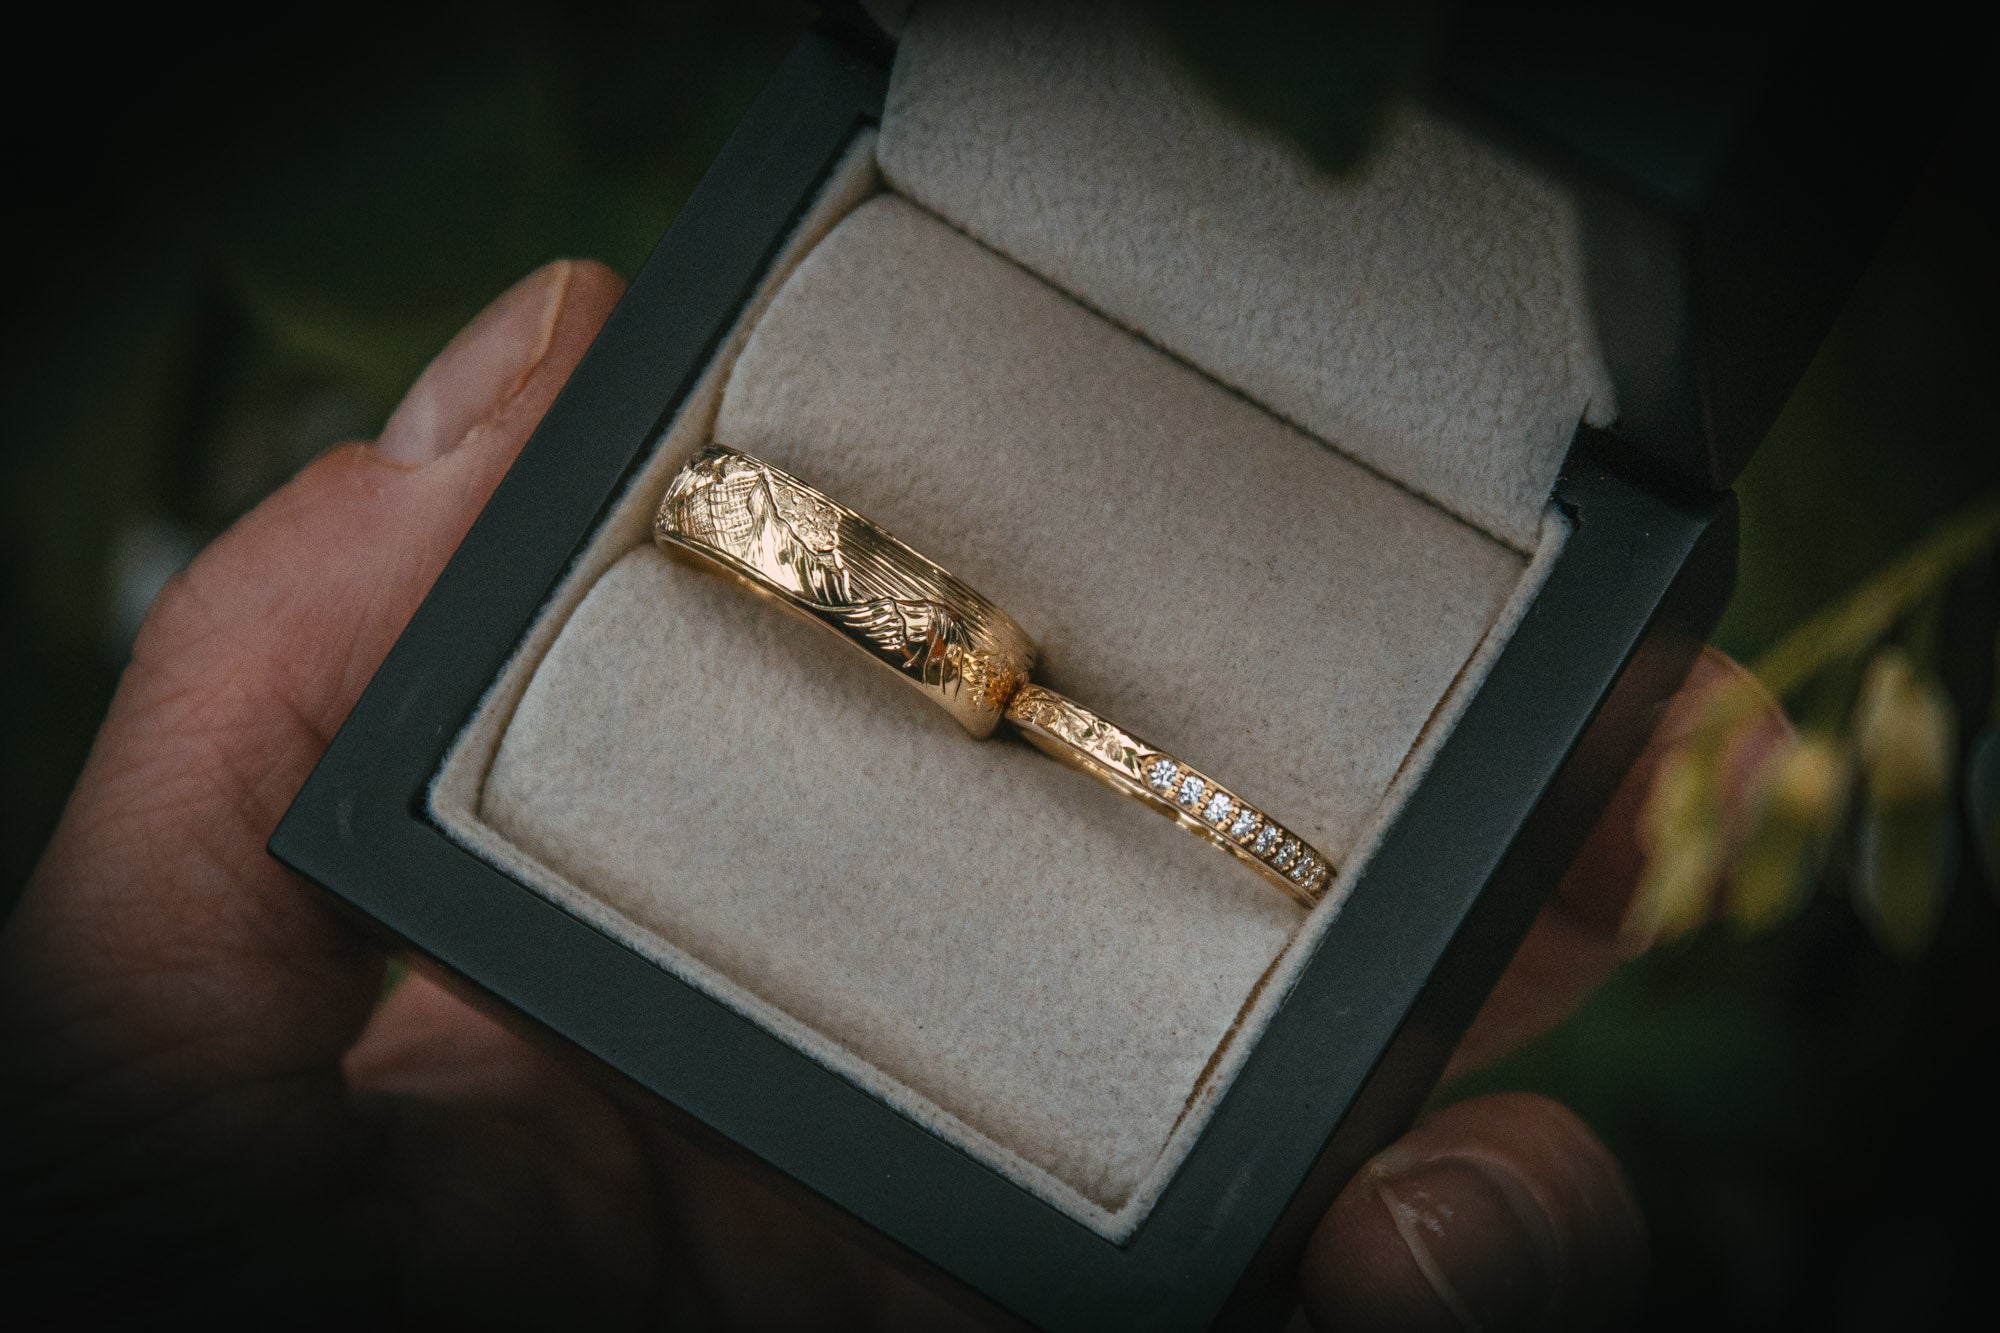 Hand engraved bespoke gold wedding rings